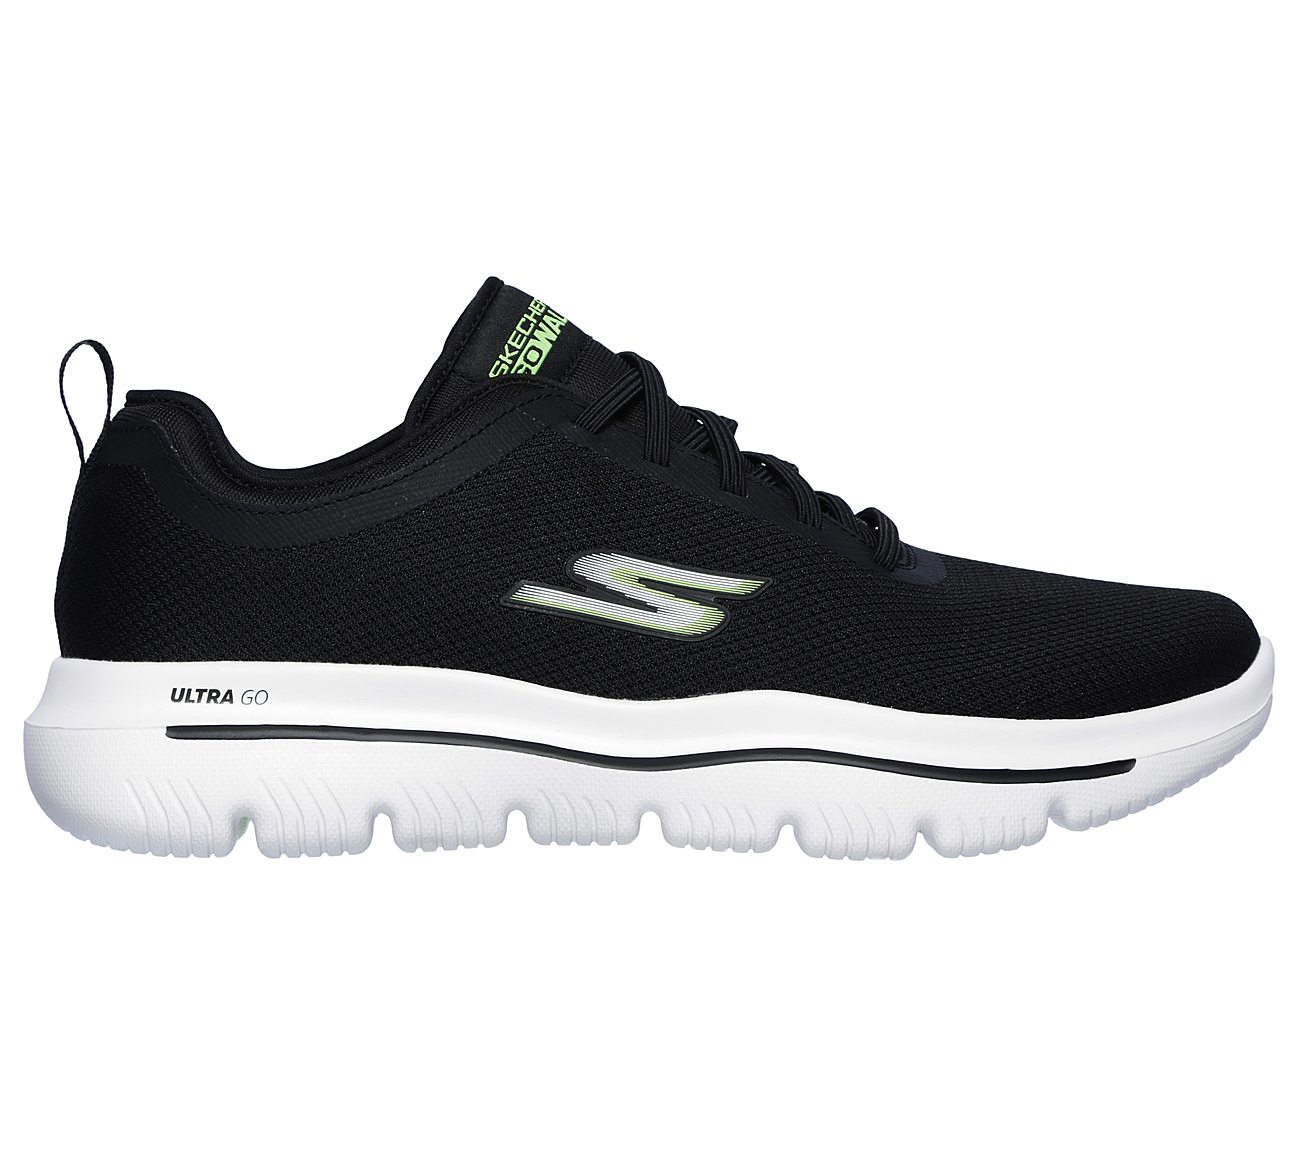 GO WALK EVOLUTION ULTRA-INTER, BLACK/GREEN Footwear Right View